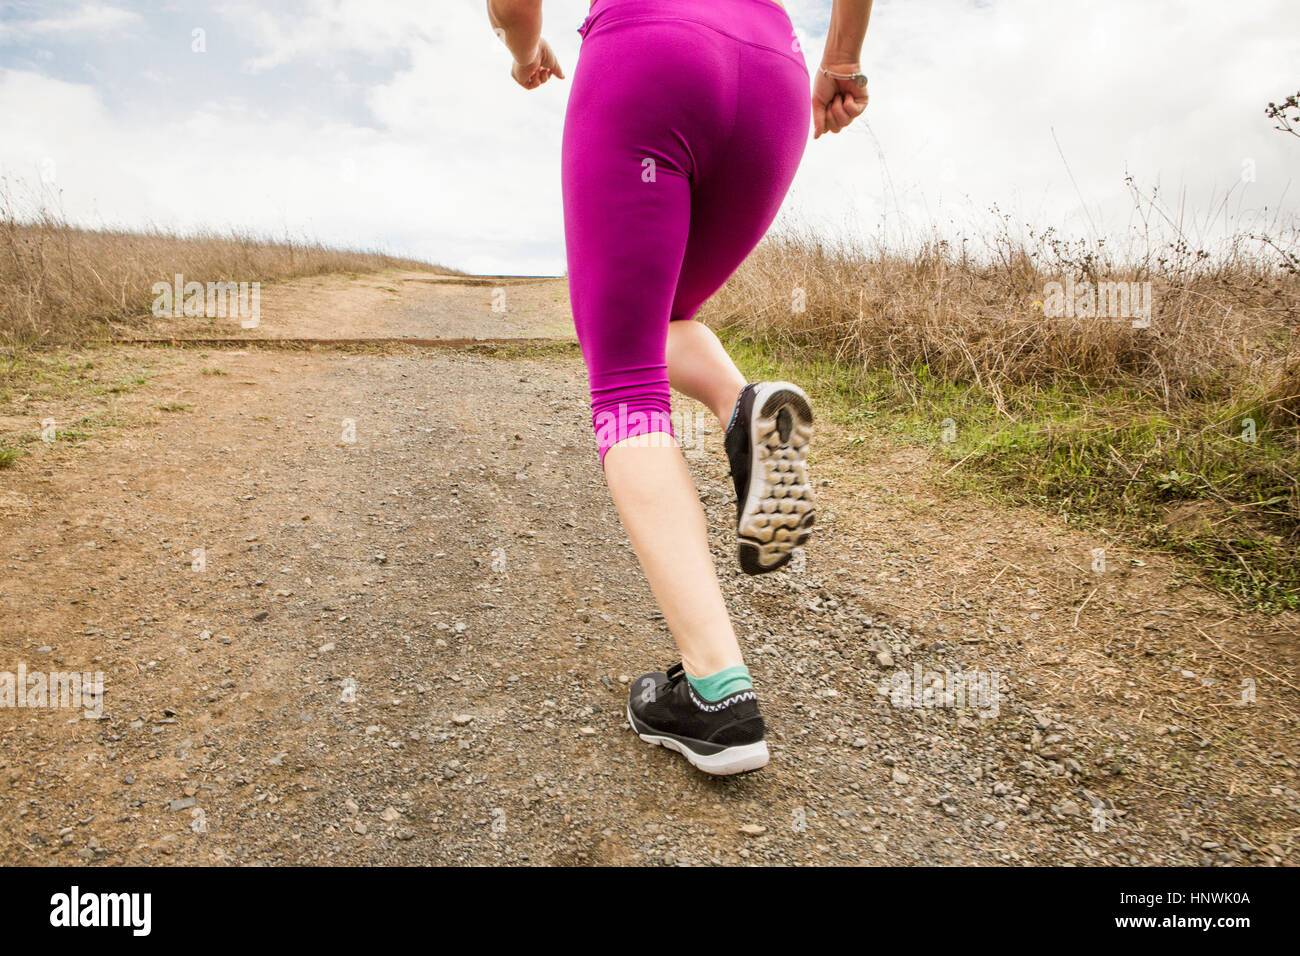 Waist down rear view of female runner running up dirt track Stock Photo